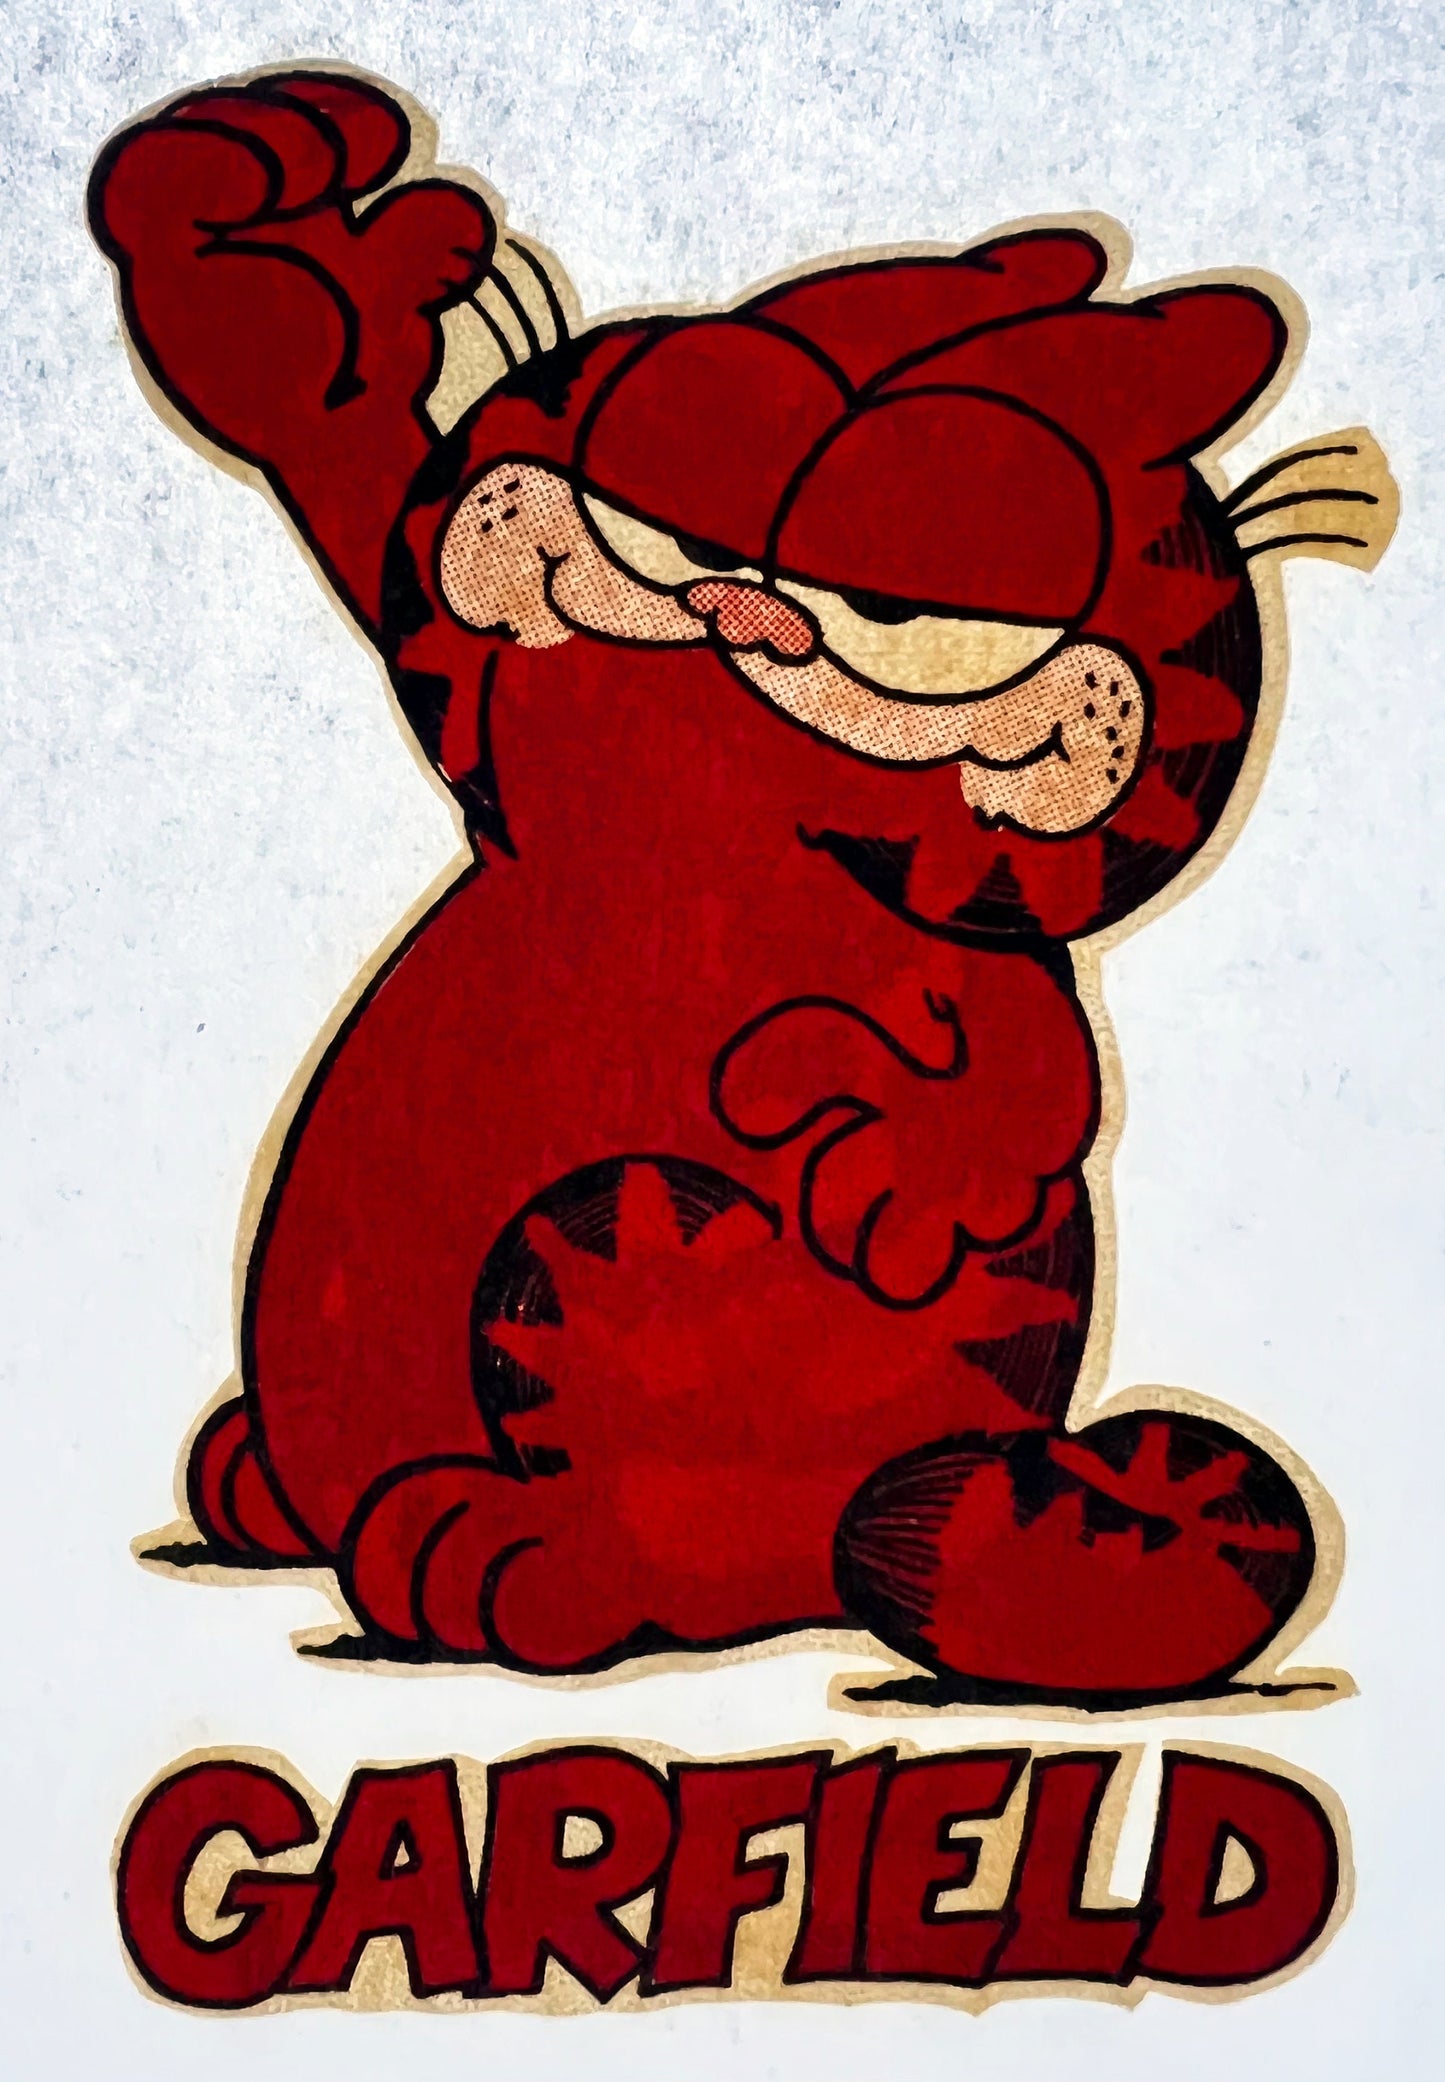 Garfield the Cat Vintage Iron On Heat Transfer